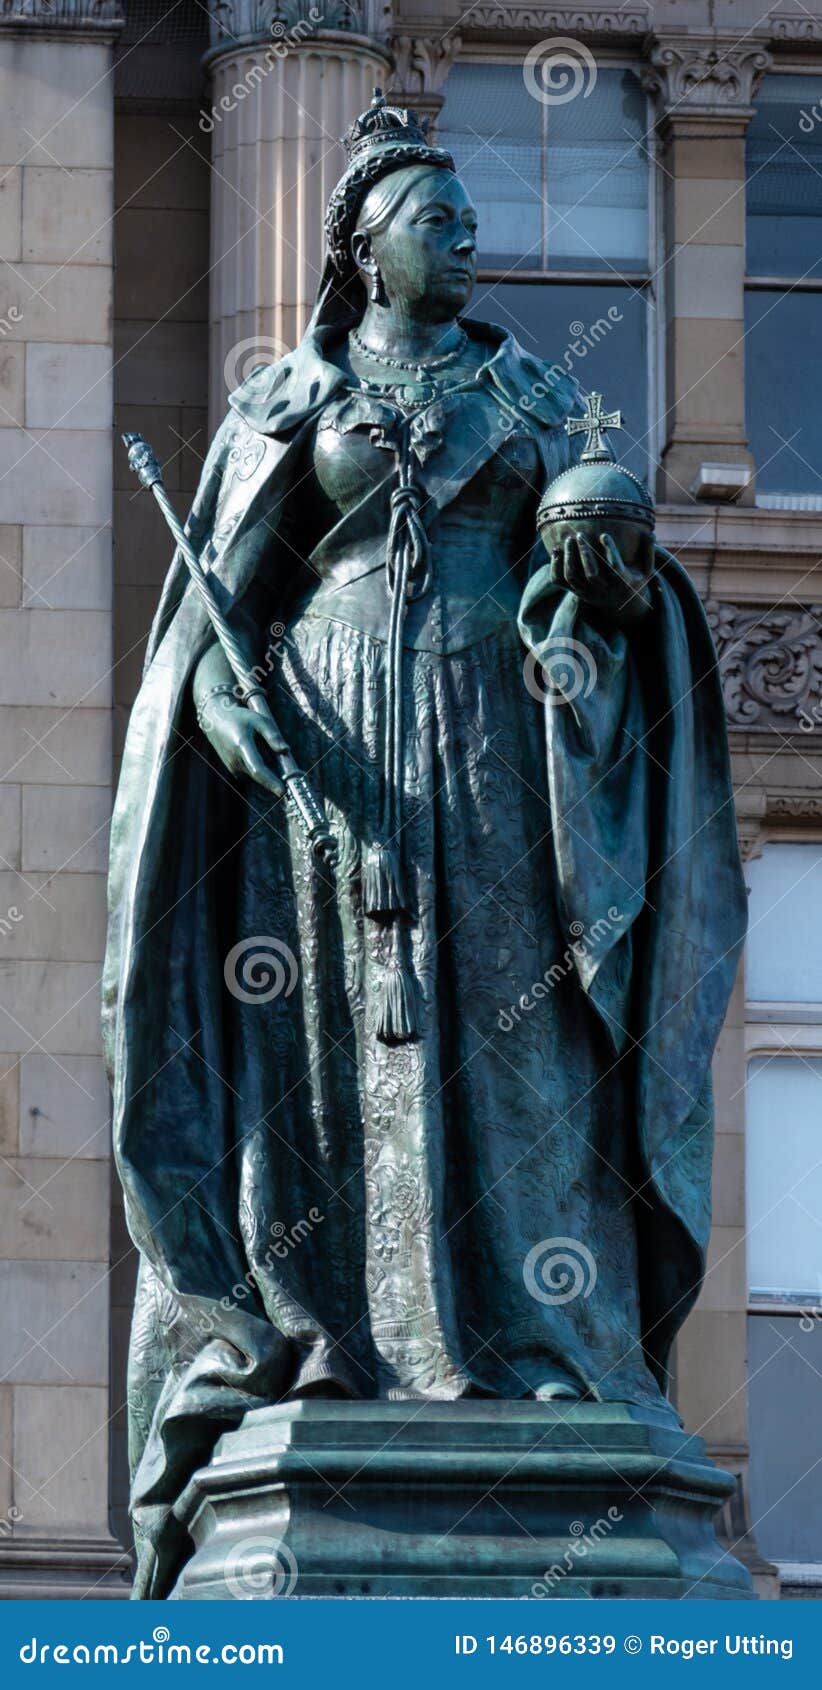 Queen Victoria Statue editorial stock image. Image of kingdom - 146896339